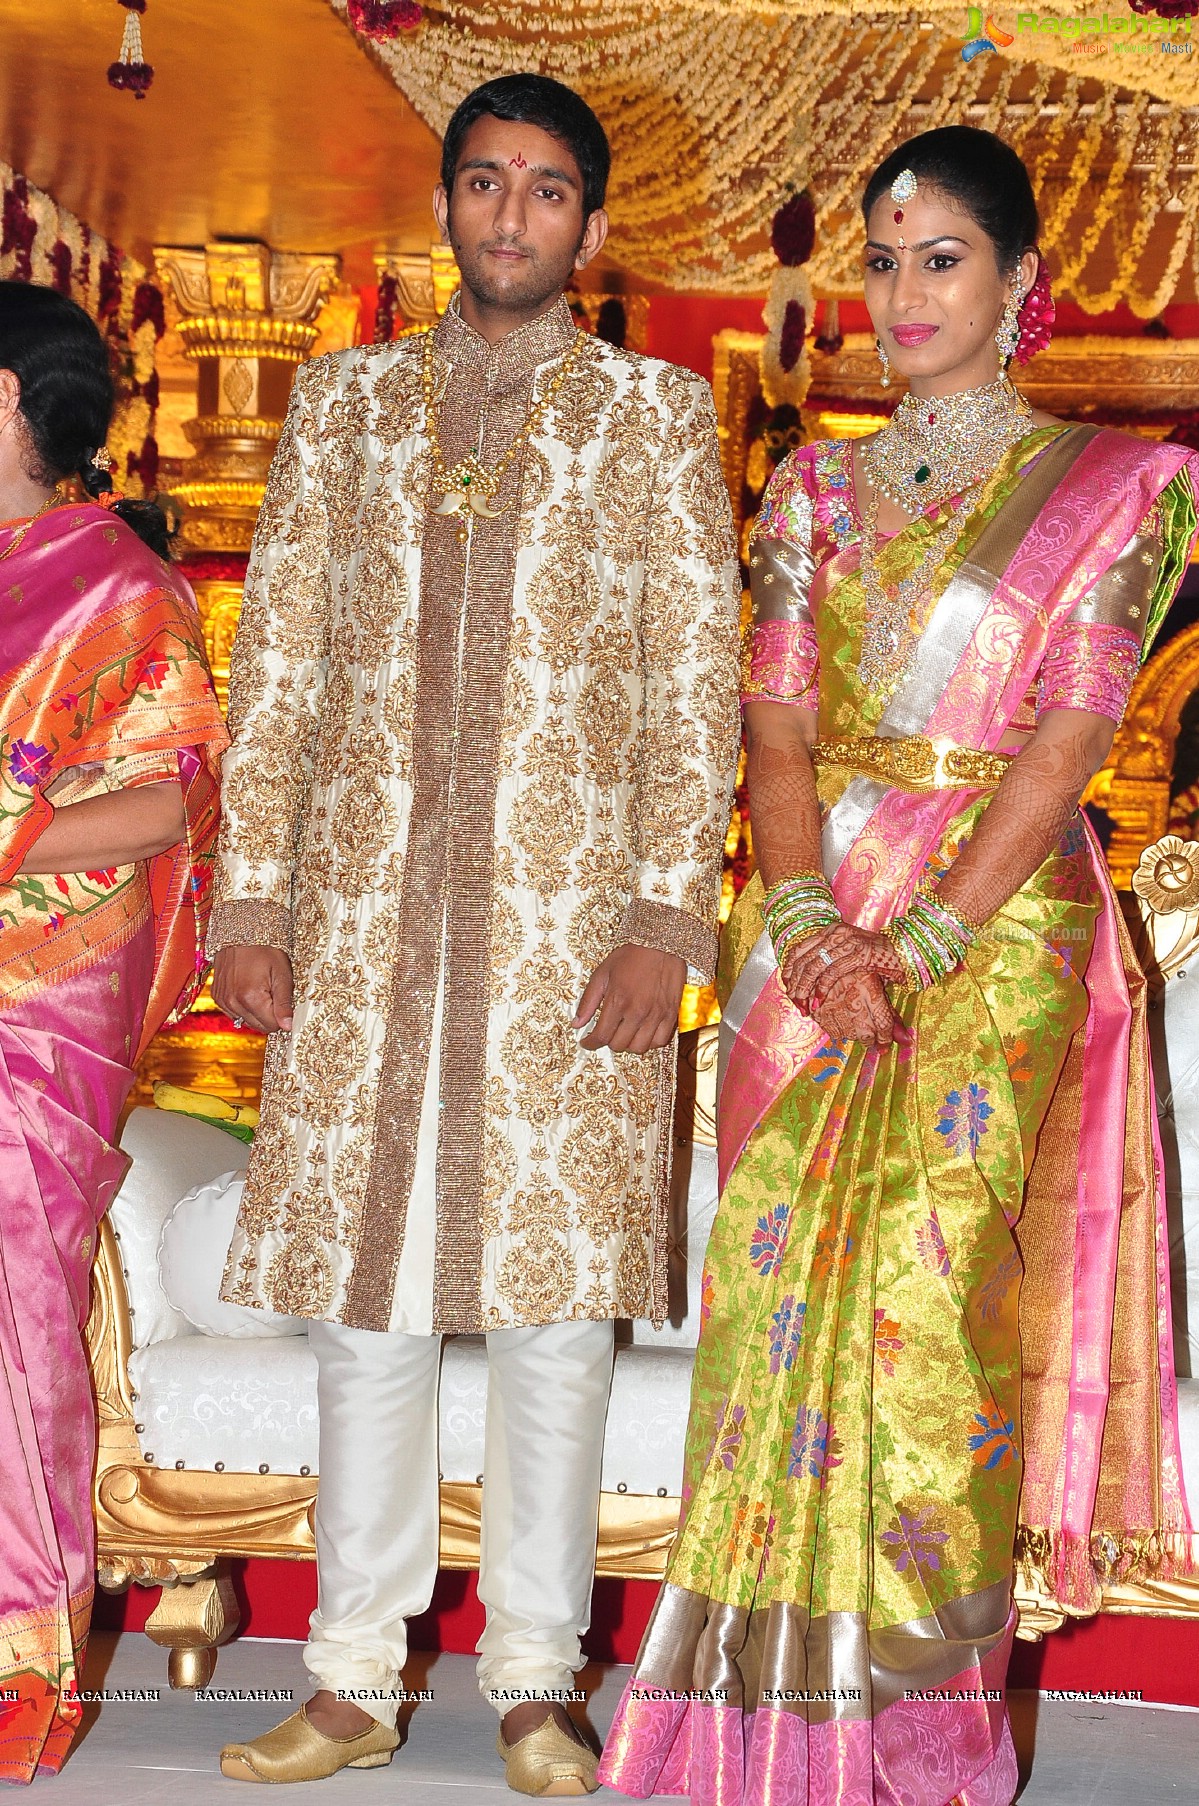 Grand Wedding of Ghattamaneni Sai Raghava Ratna Babu (Bobby) (S/o Adiseshagiri Rao Ghattamaneni) and Priyanka